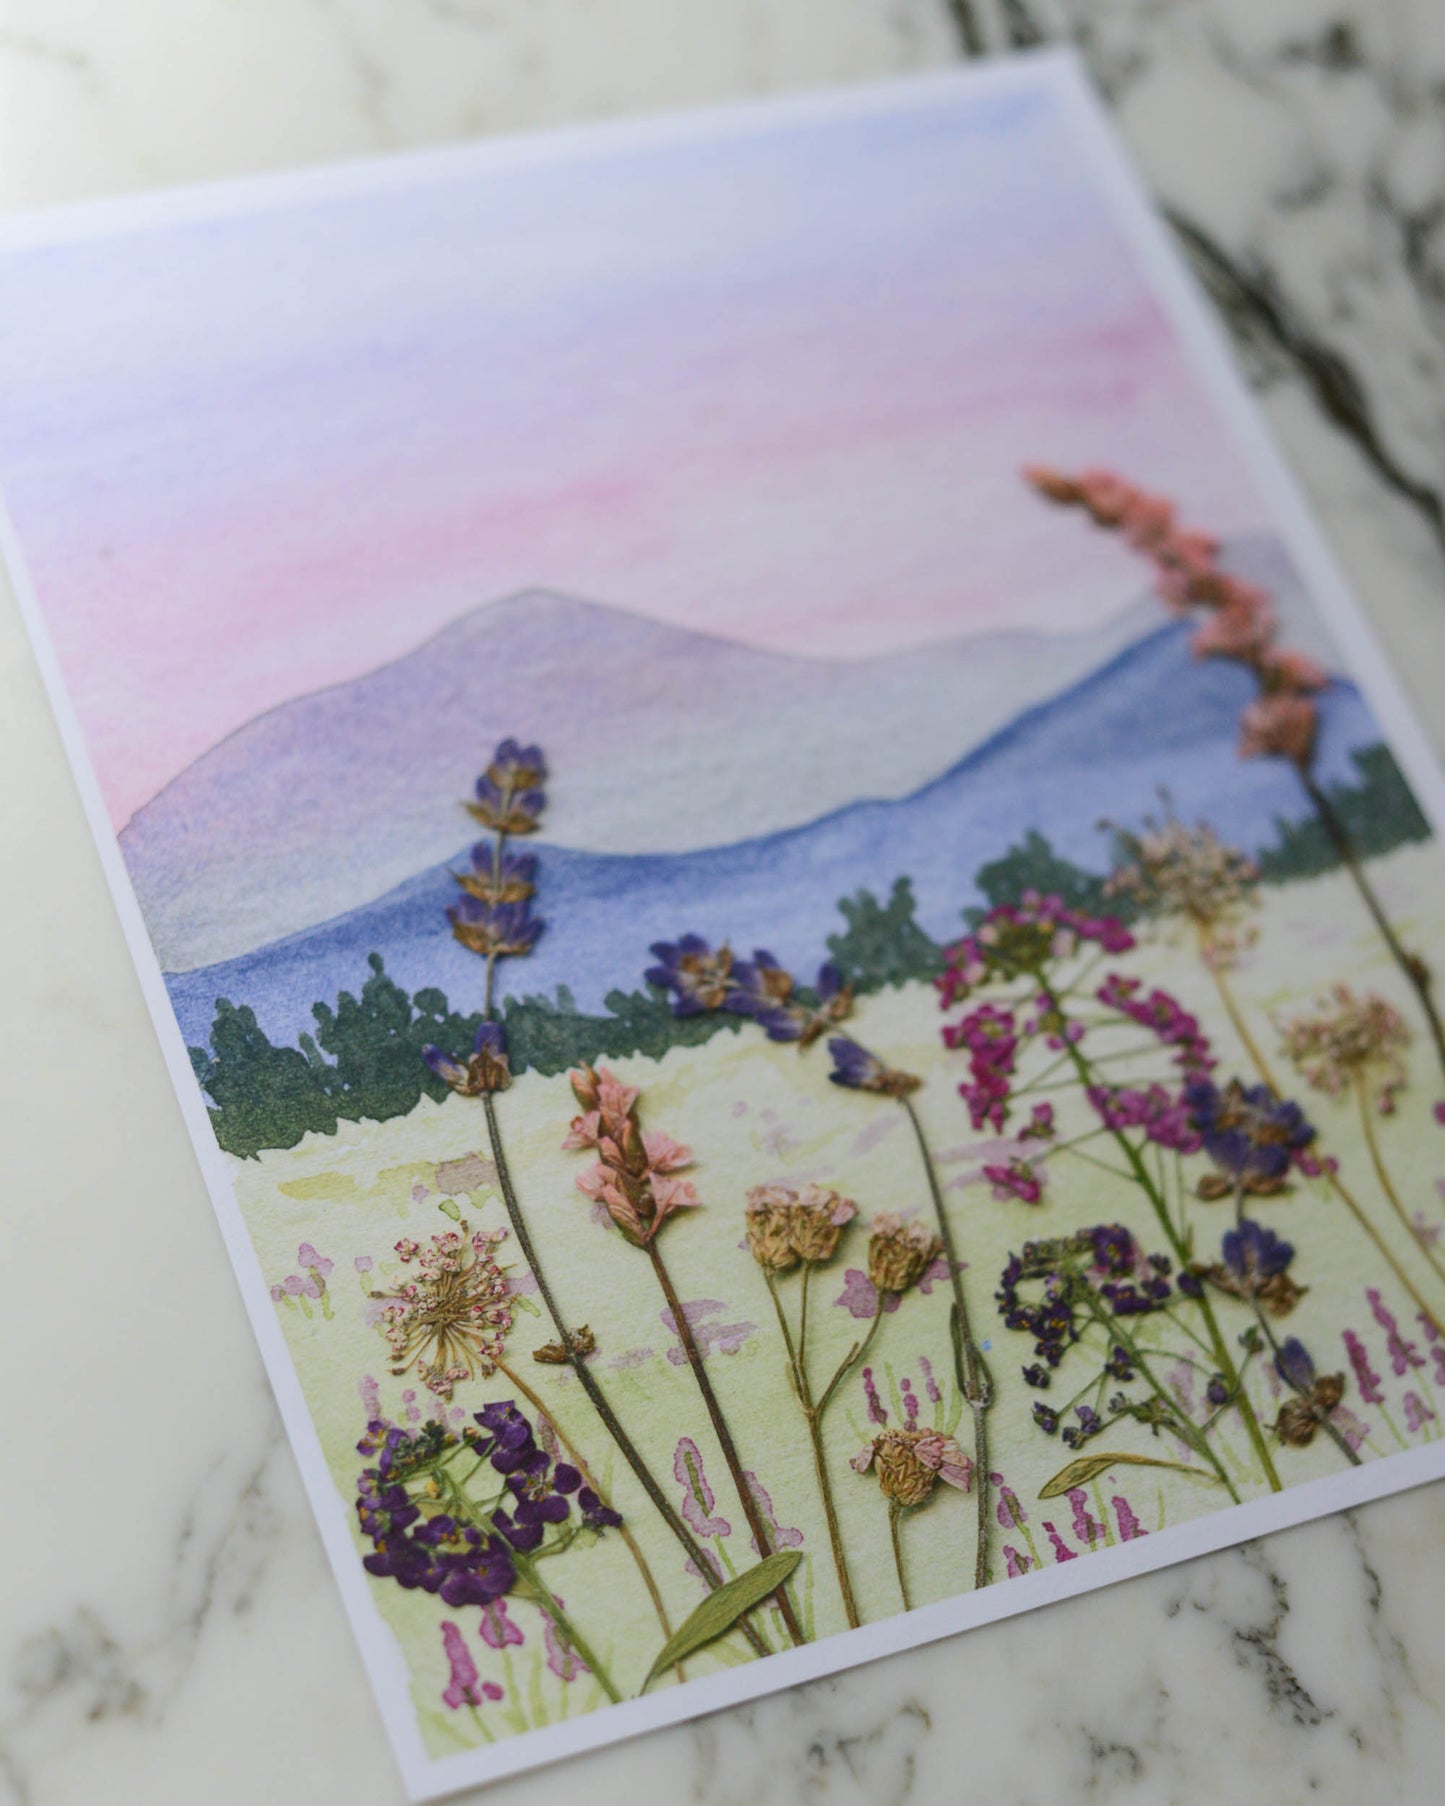 Foothills Sunset - Watercolor Flowerscape Print artwork